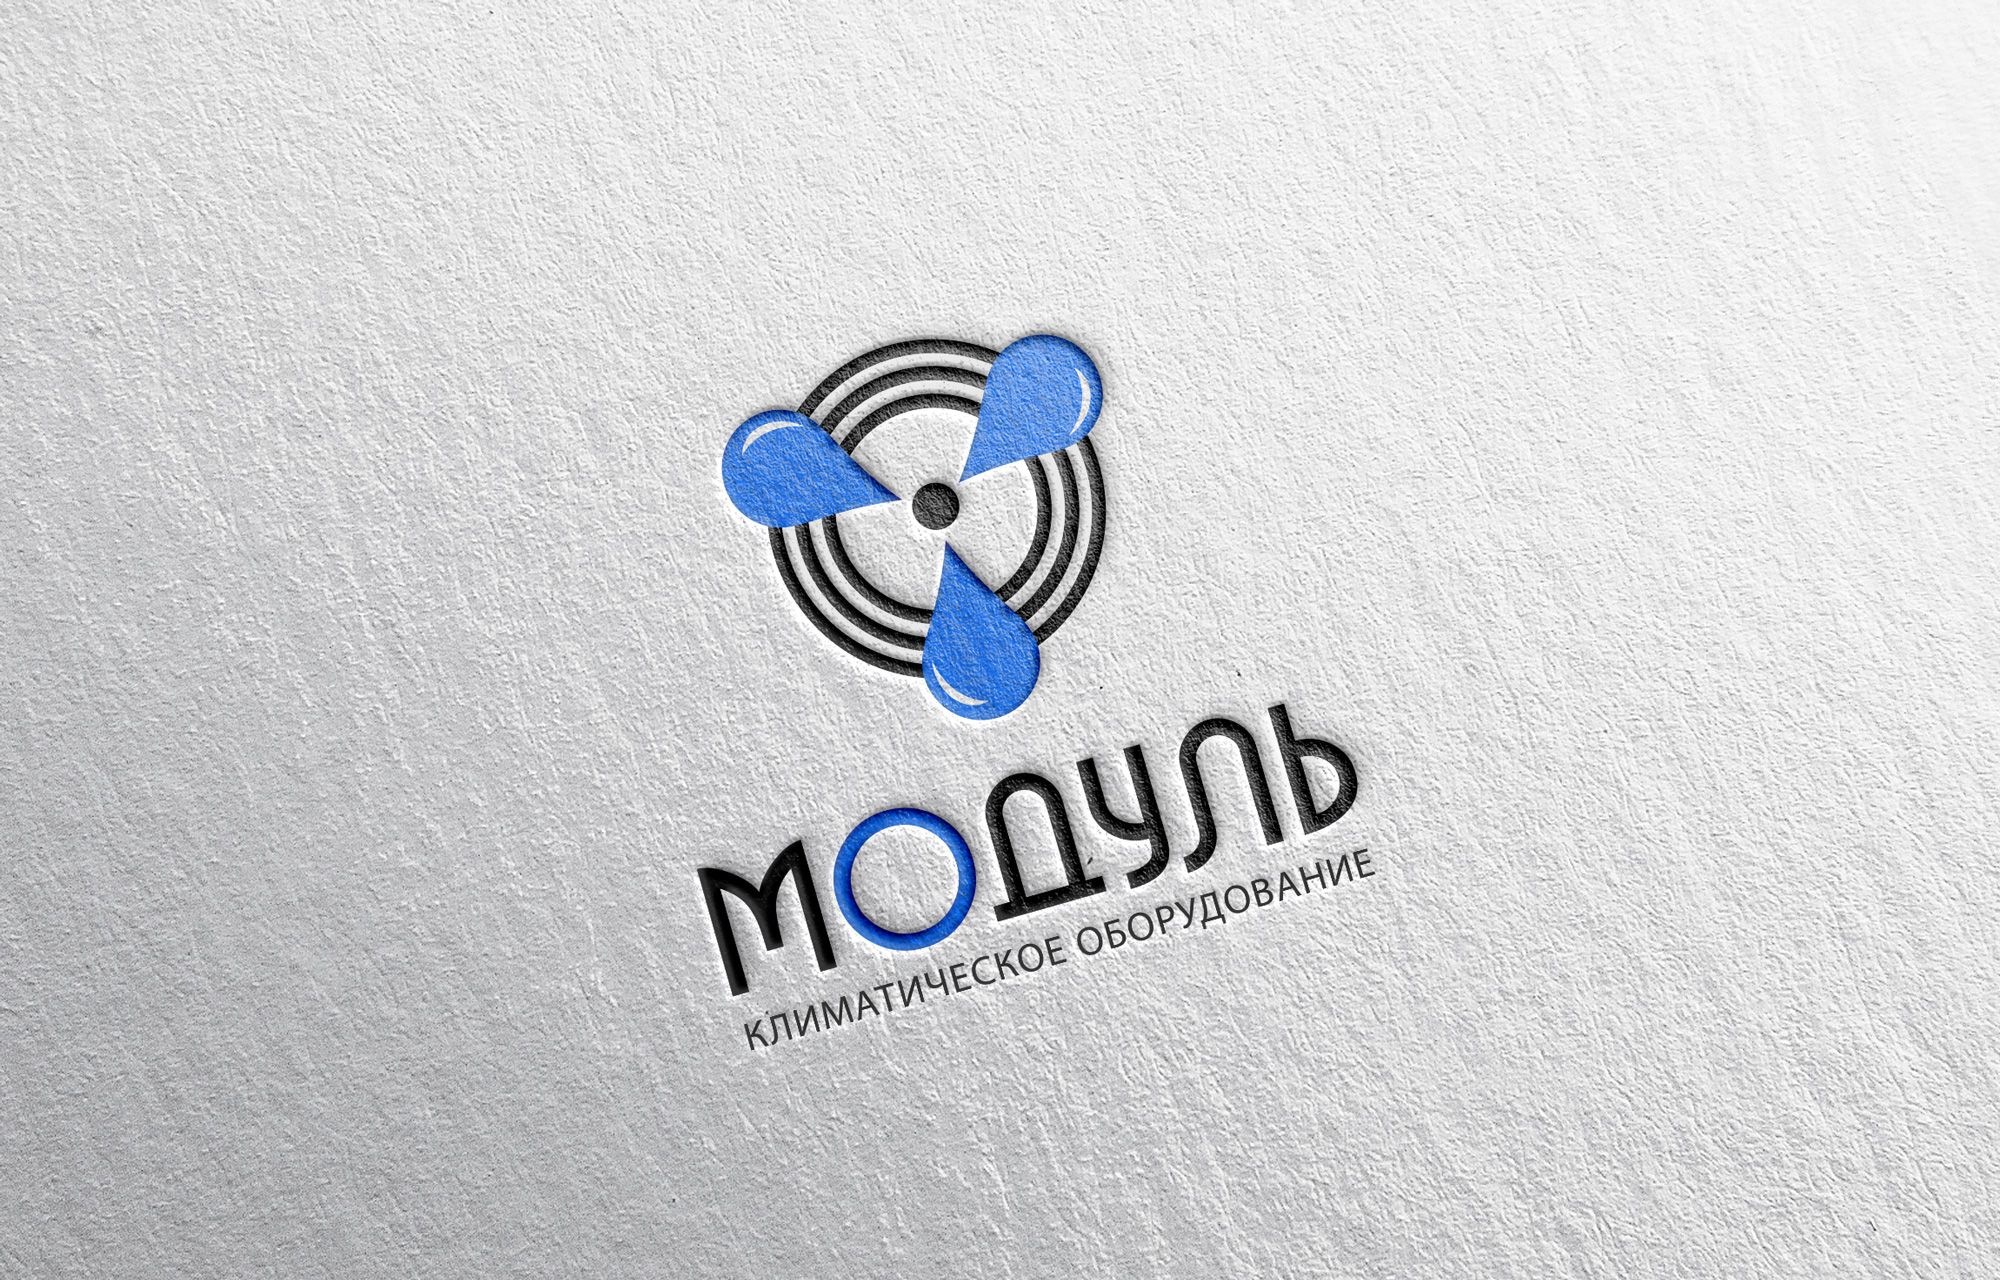 Логотип для интернет магазина 